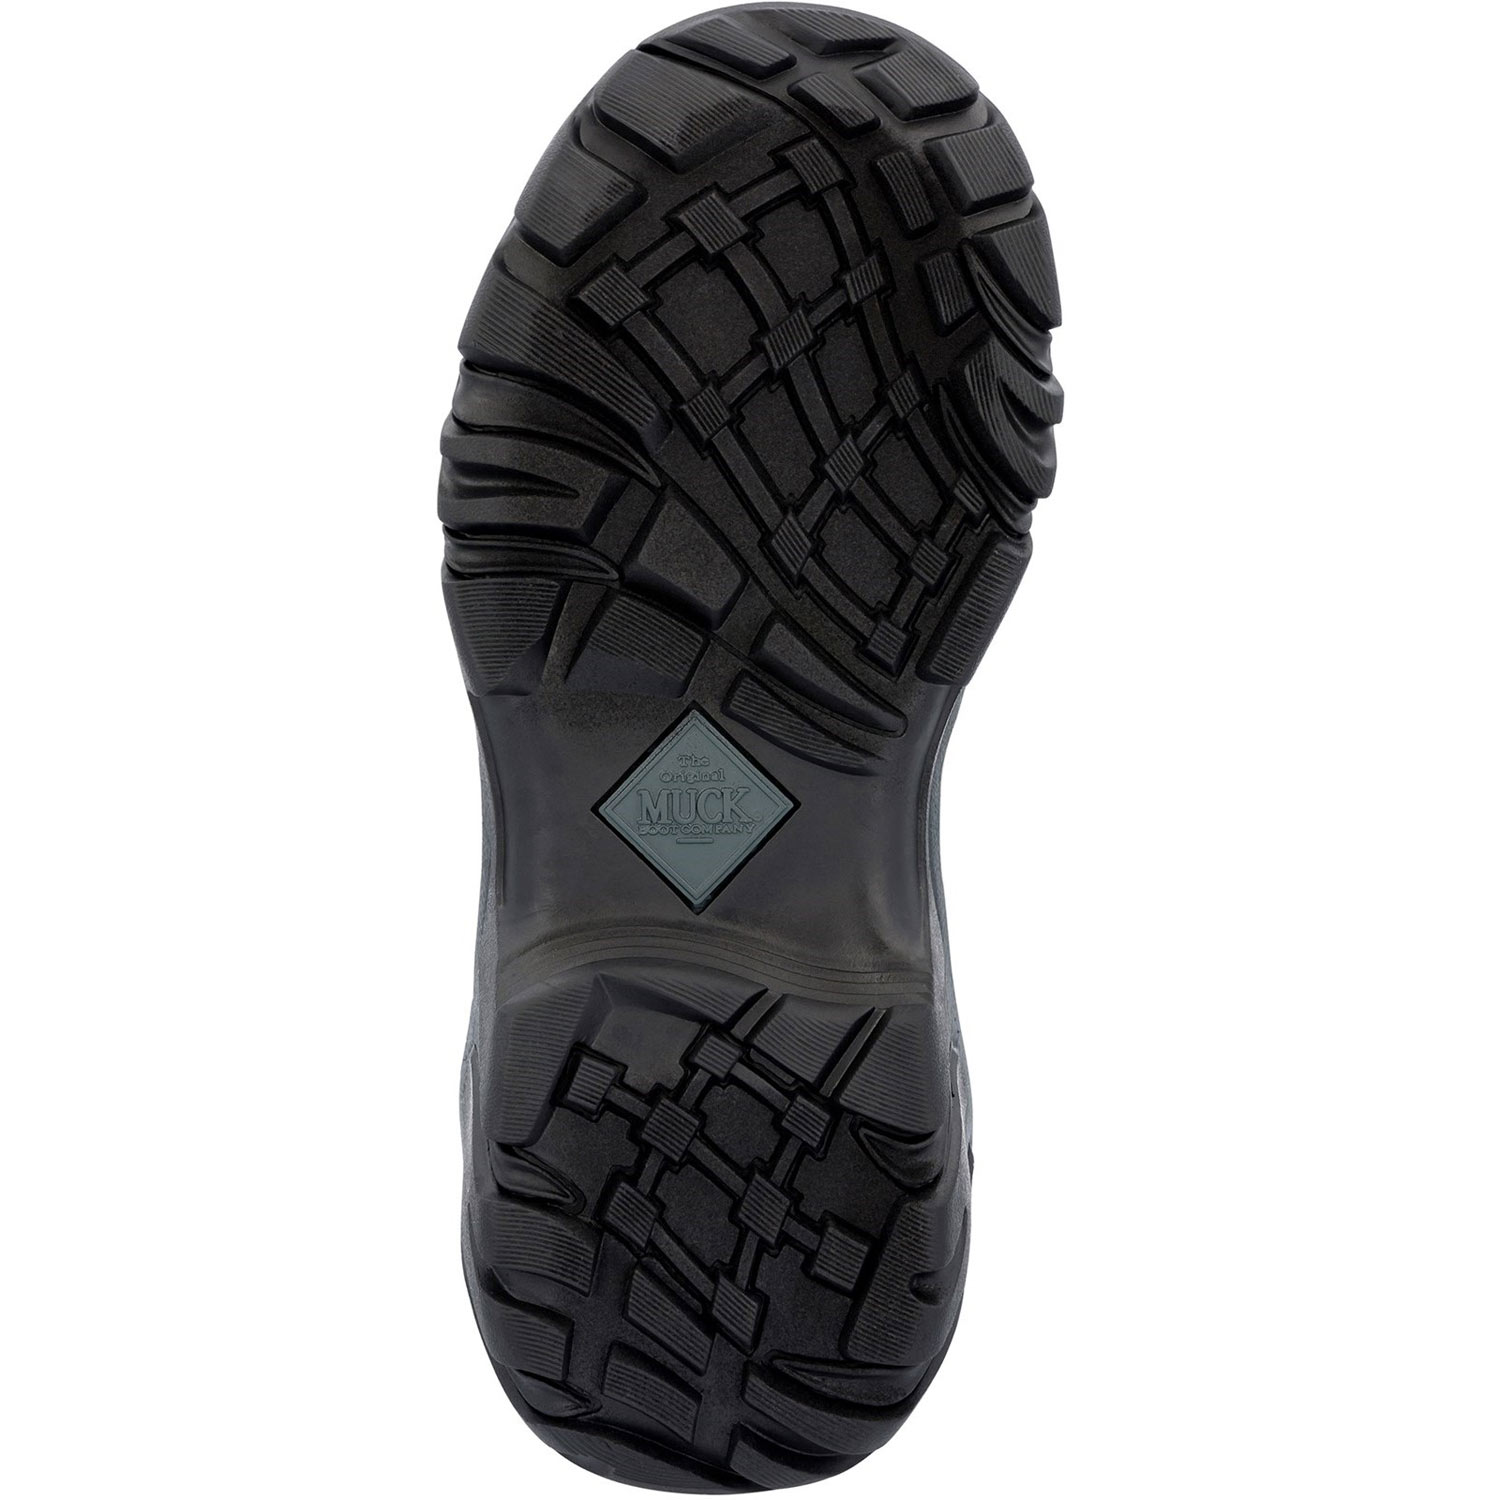 Muck Boots Woody Sport - Black/Dark Grey UK Size 9 - £130.5 ...